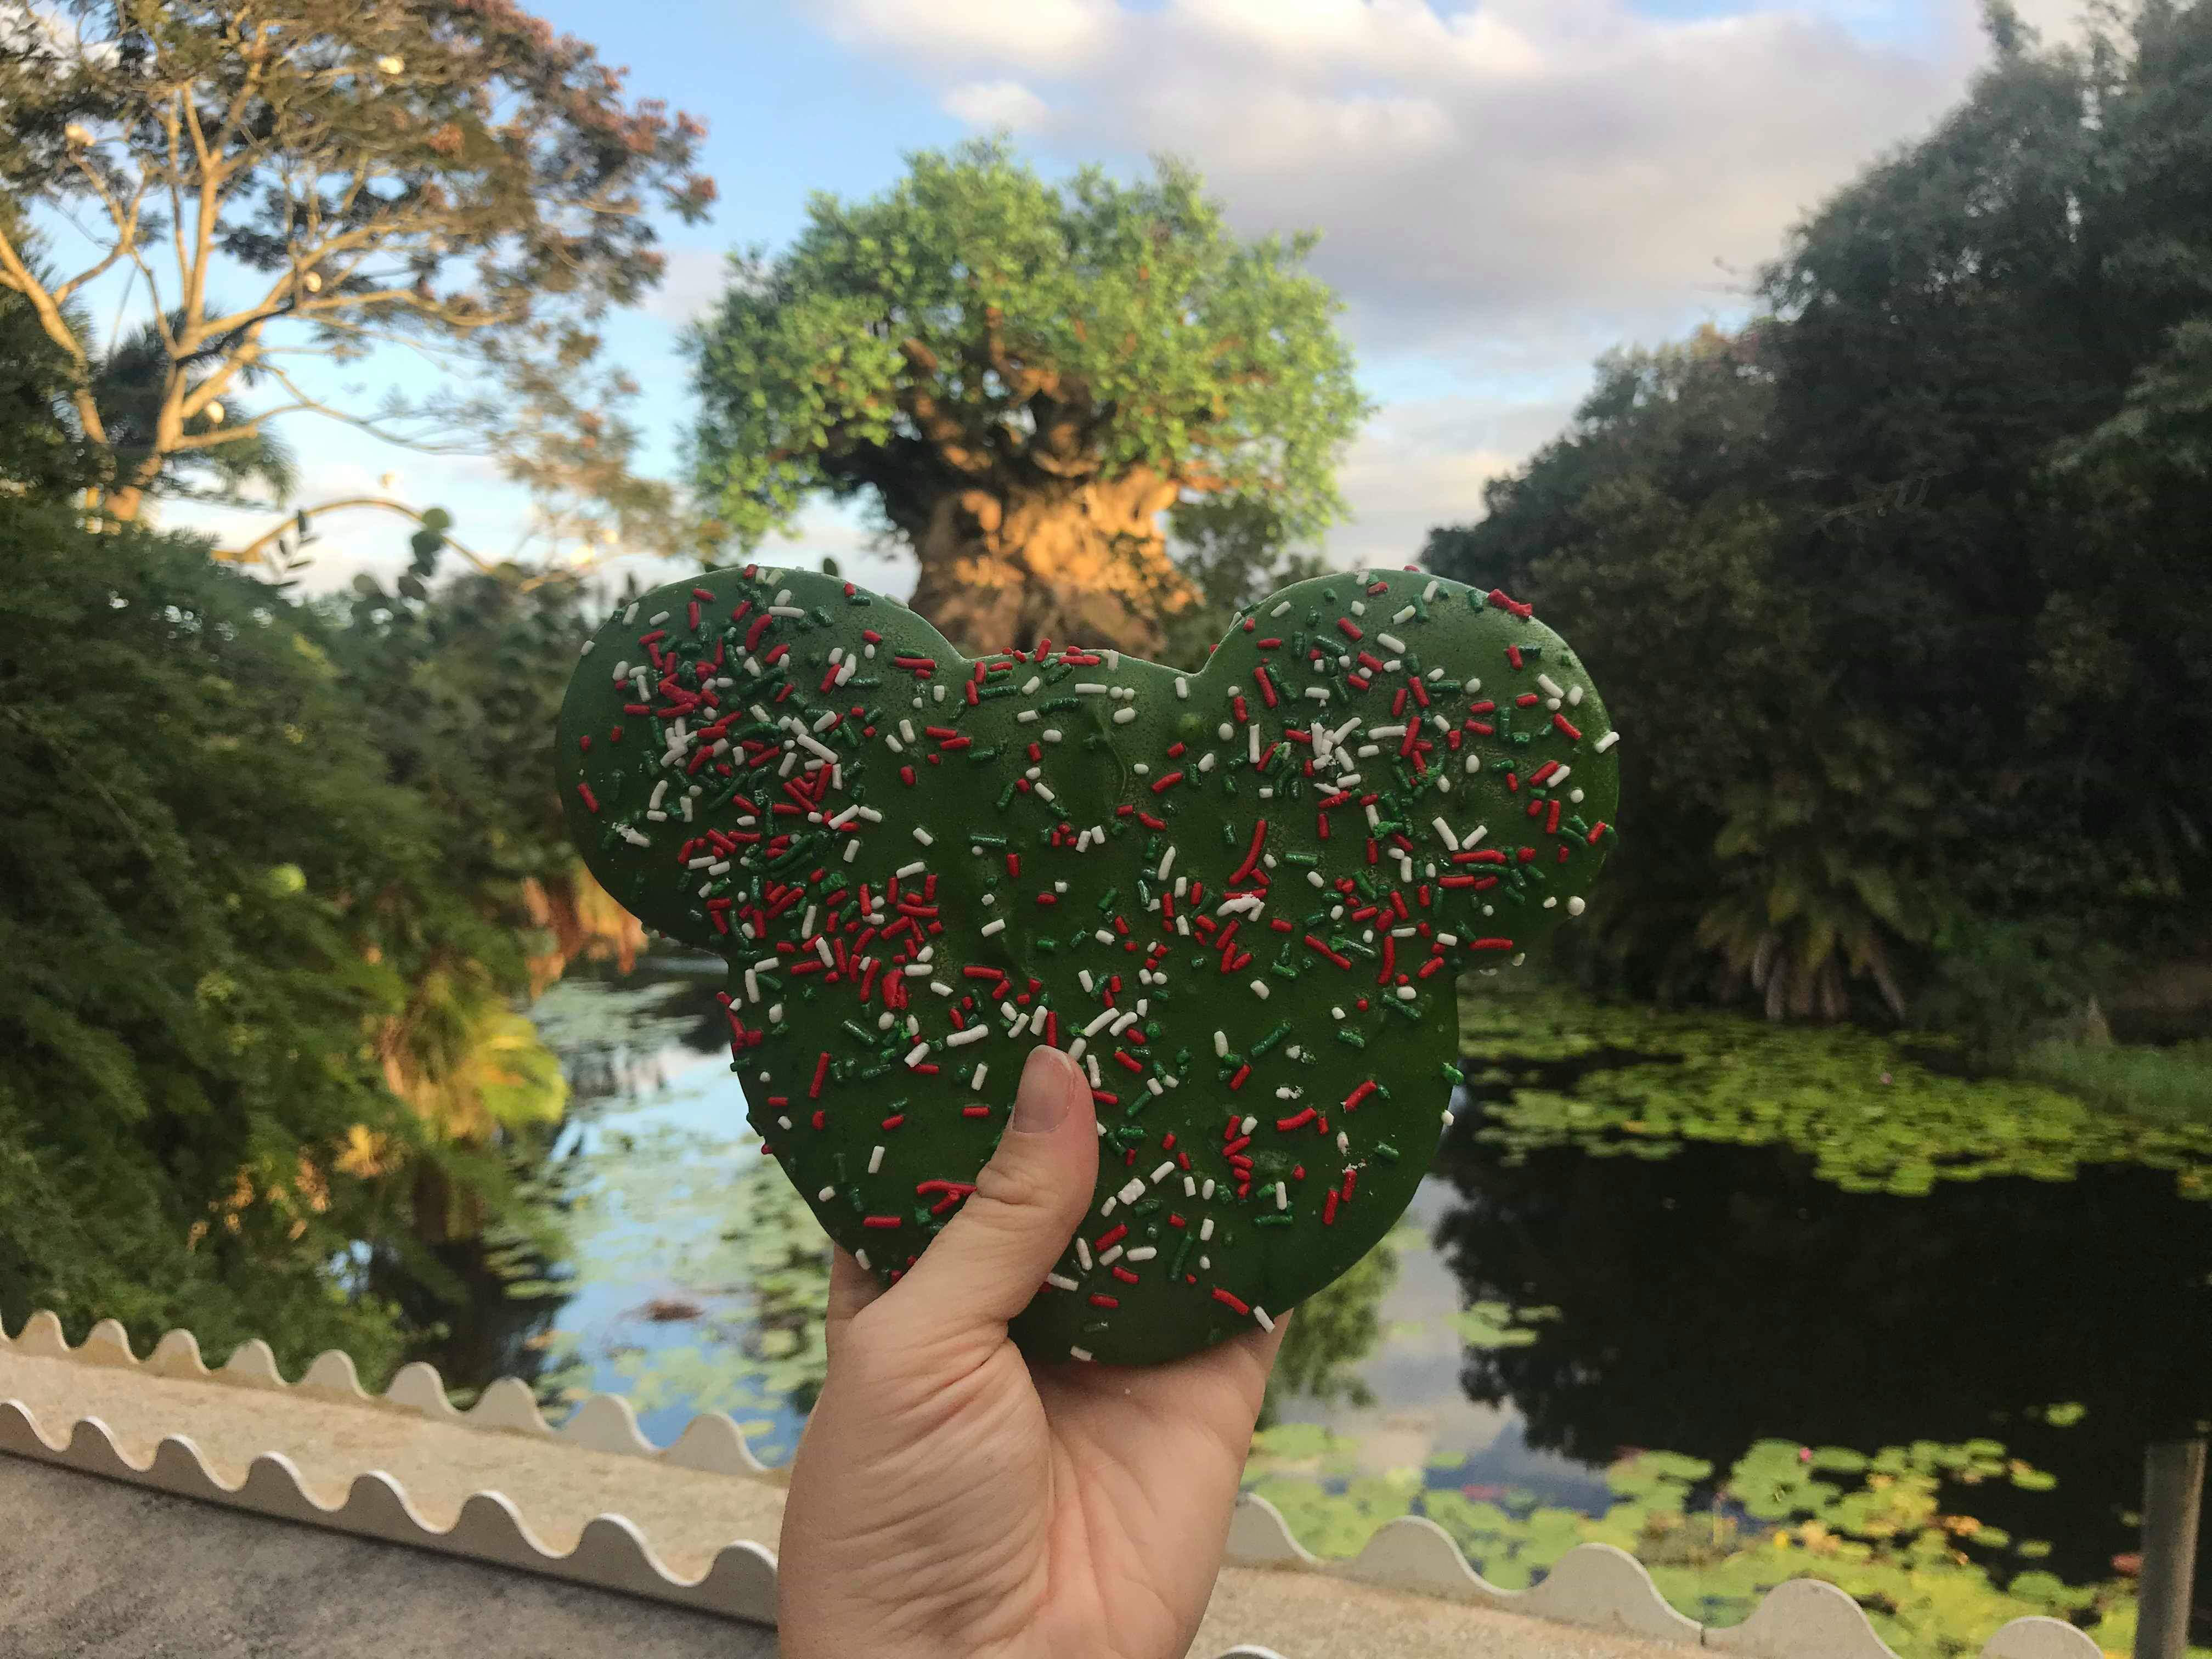 Jumbo Mickey Shaped Sugar Cookie Gets Very Merry At Disney’s Animal Kingdom